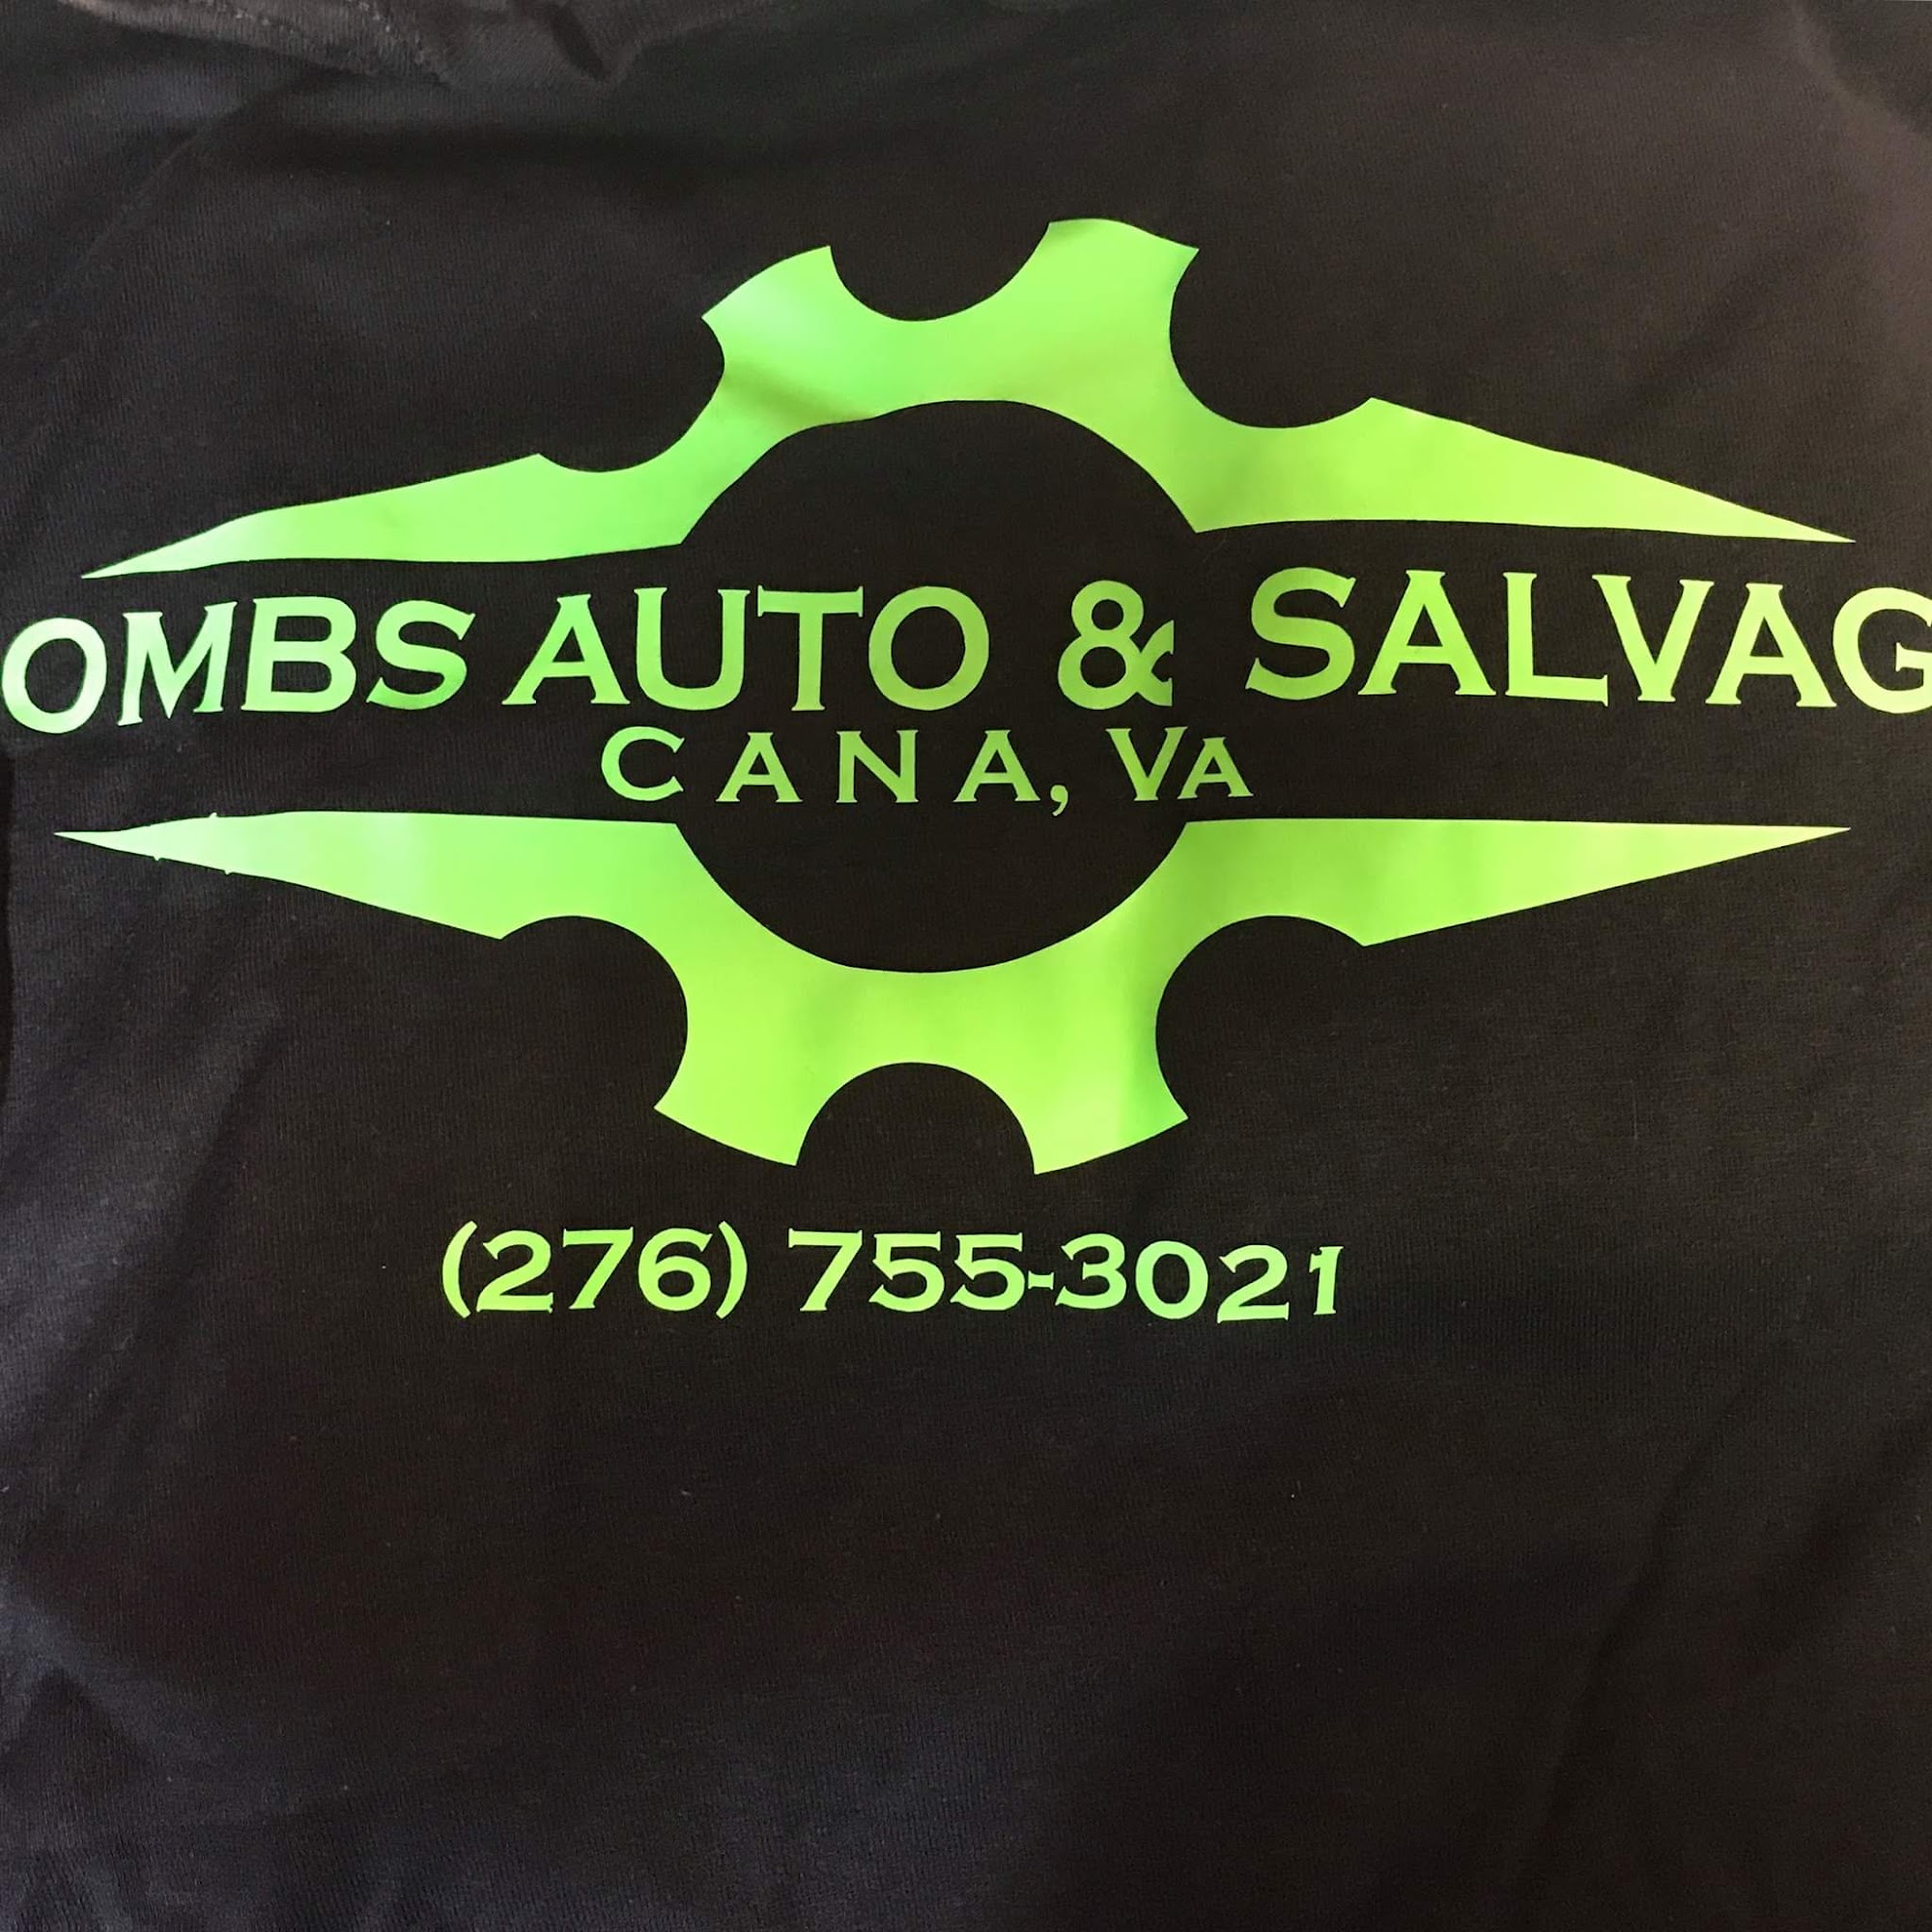 Combs auto and salvage 444 Oak Ridge Rd, Cana Virginia 24317